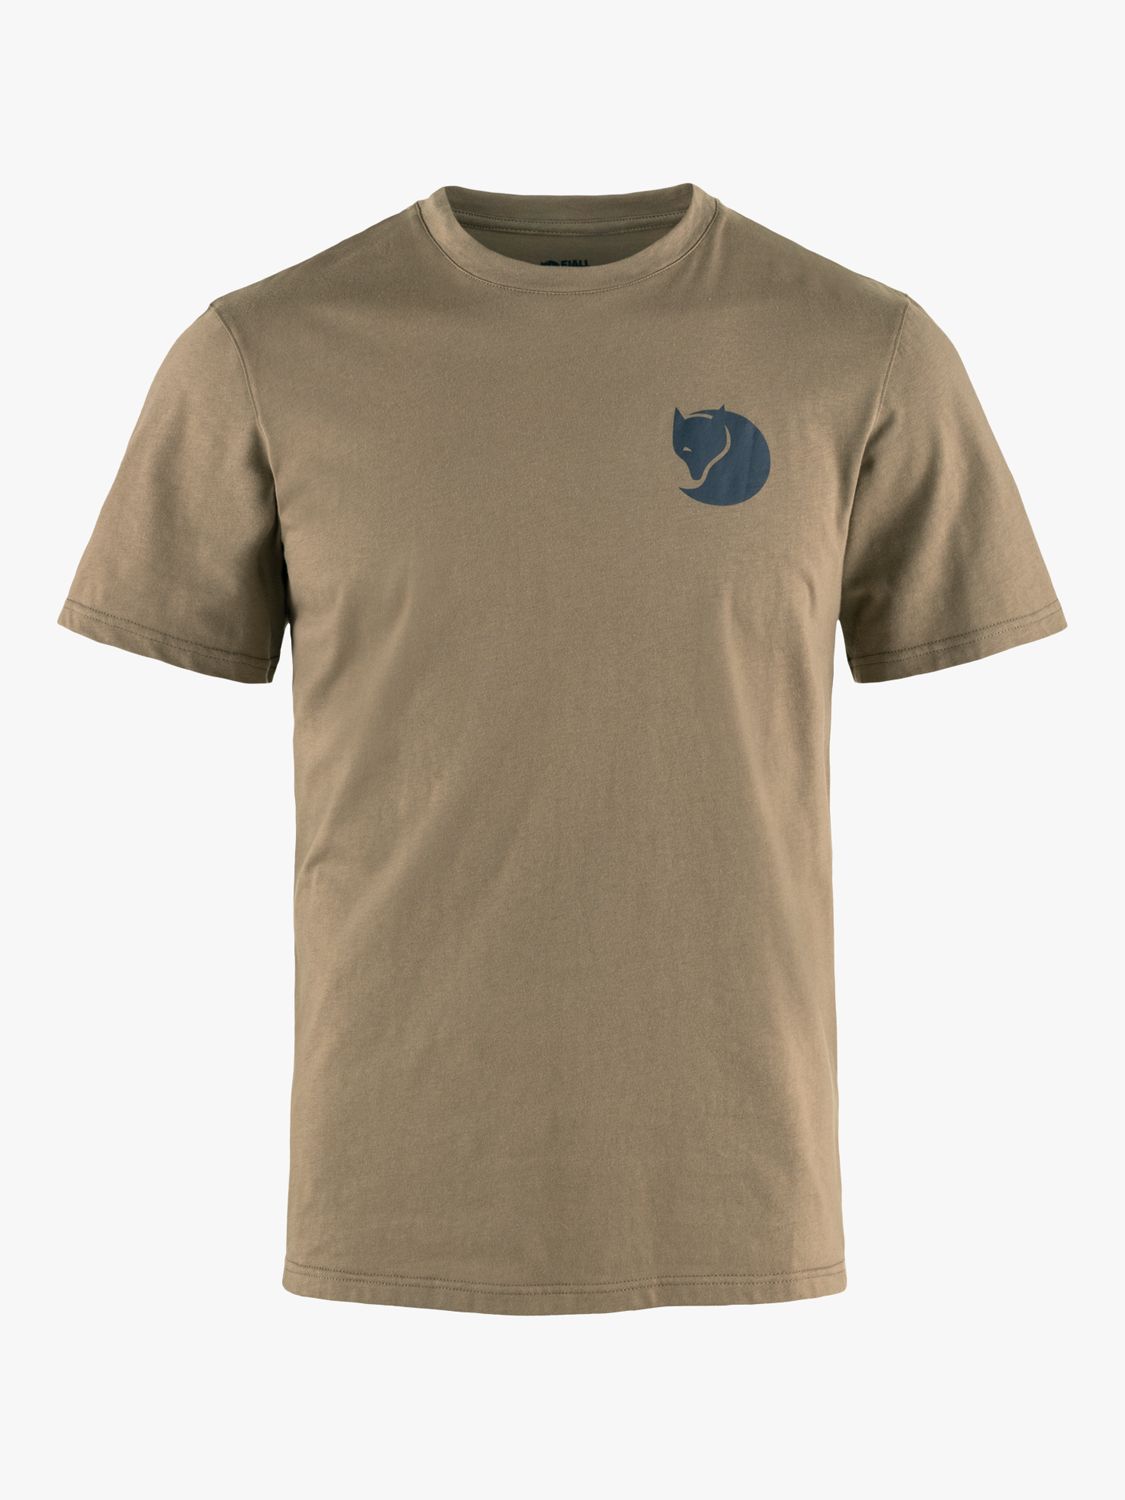 Fjällräven Walk With Nature T-Shirt, Brown, XL